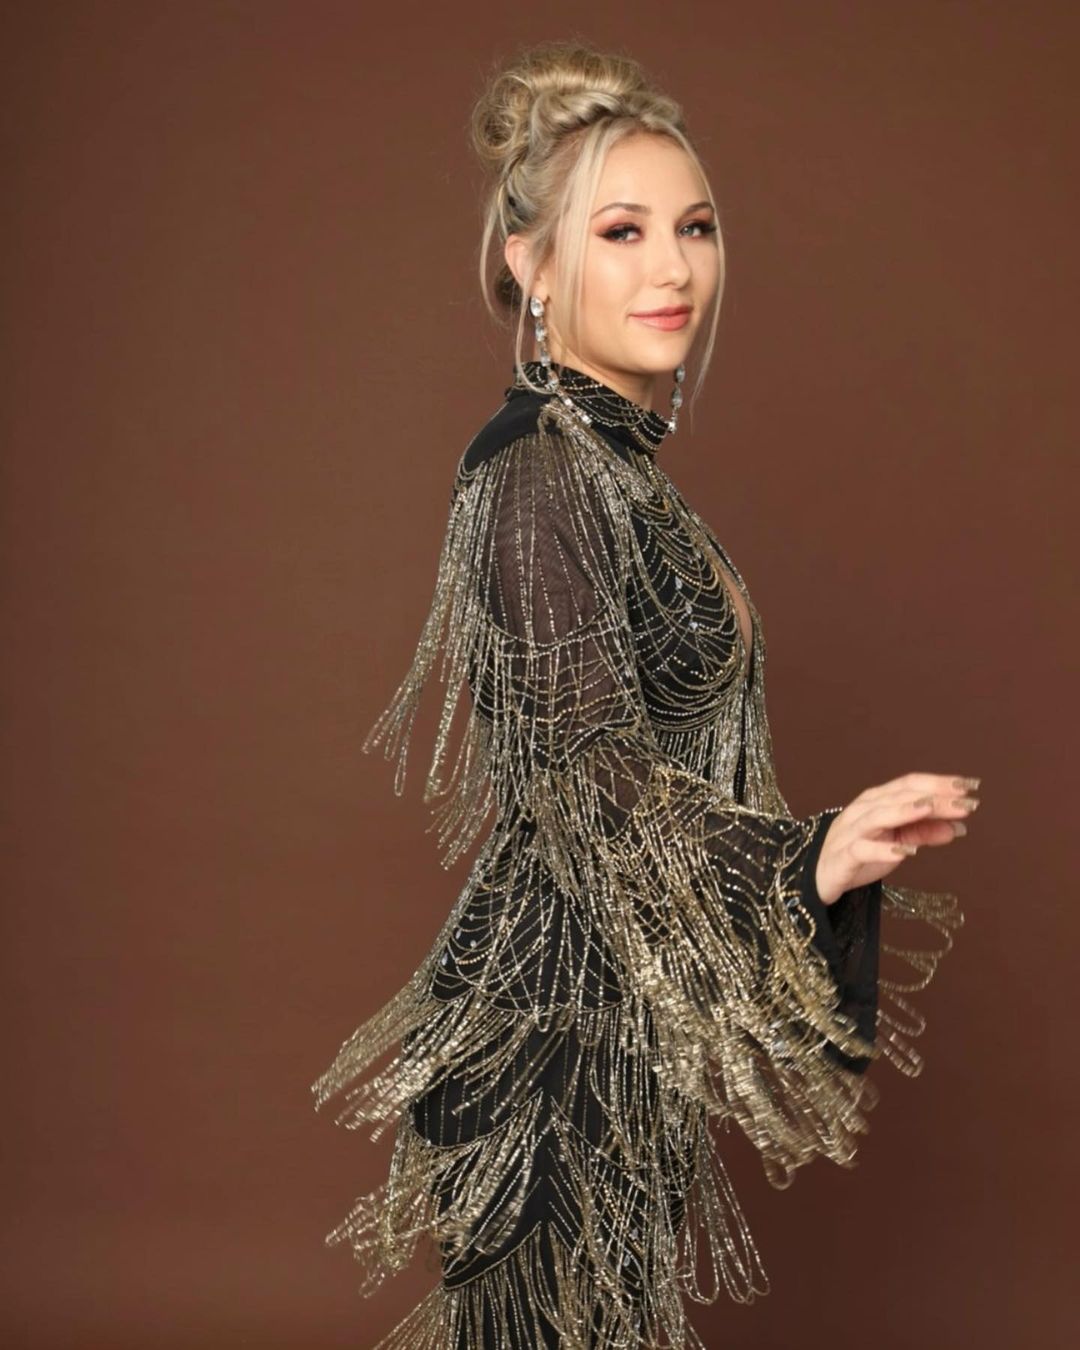 Alexes Marie Pelzer wearing black dress with golden beads